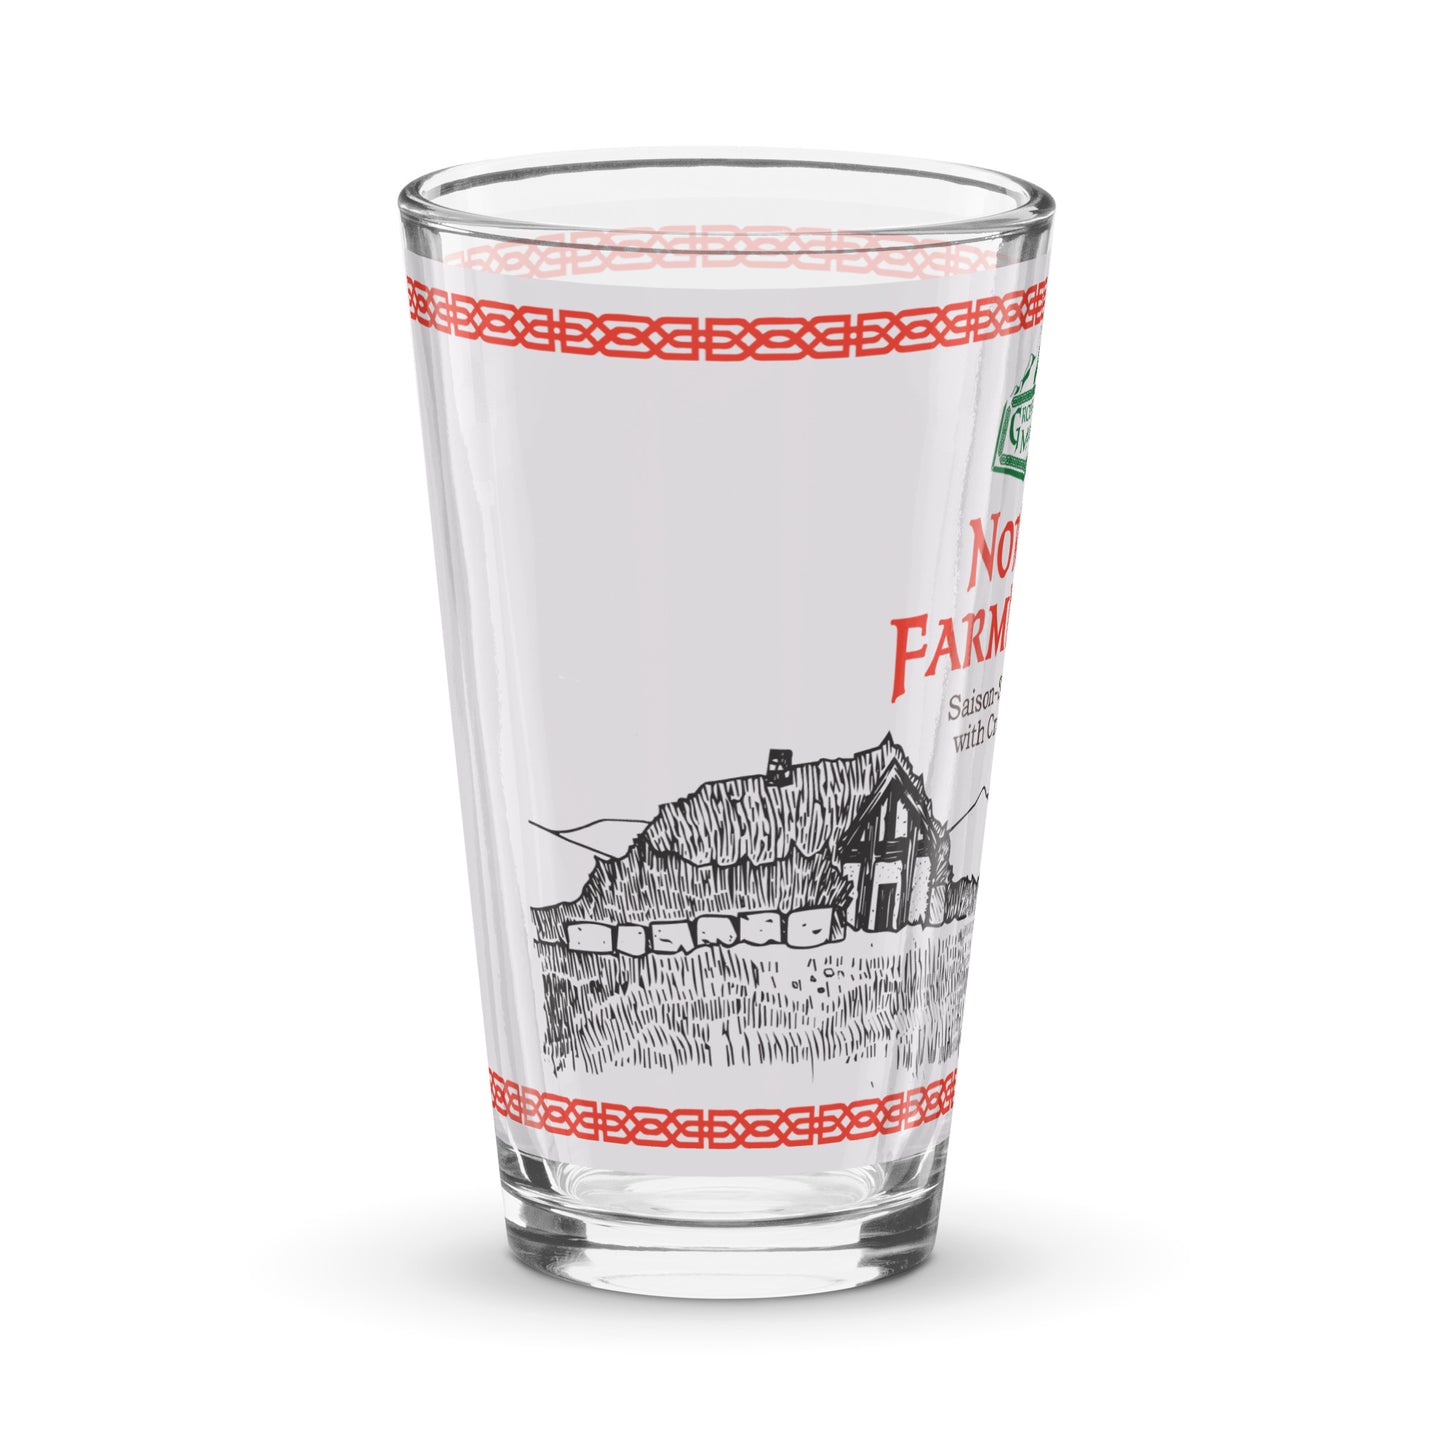 Nordic Farmhouse Label Pint Glass